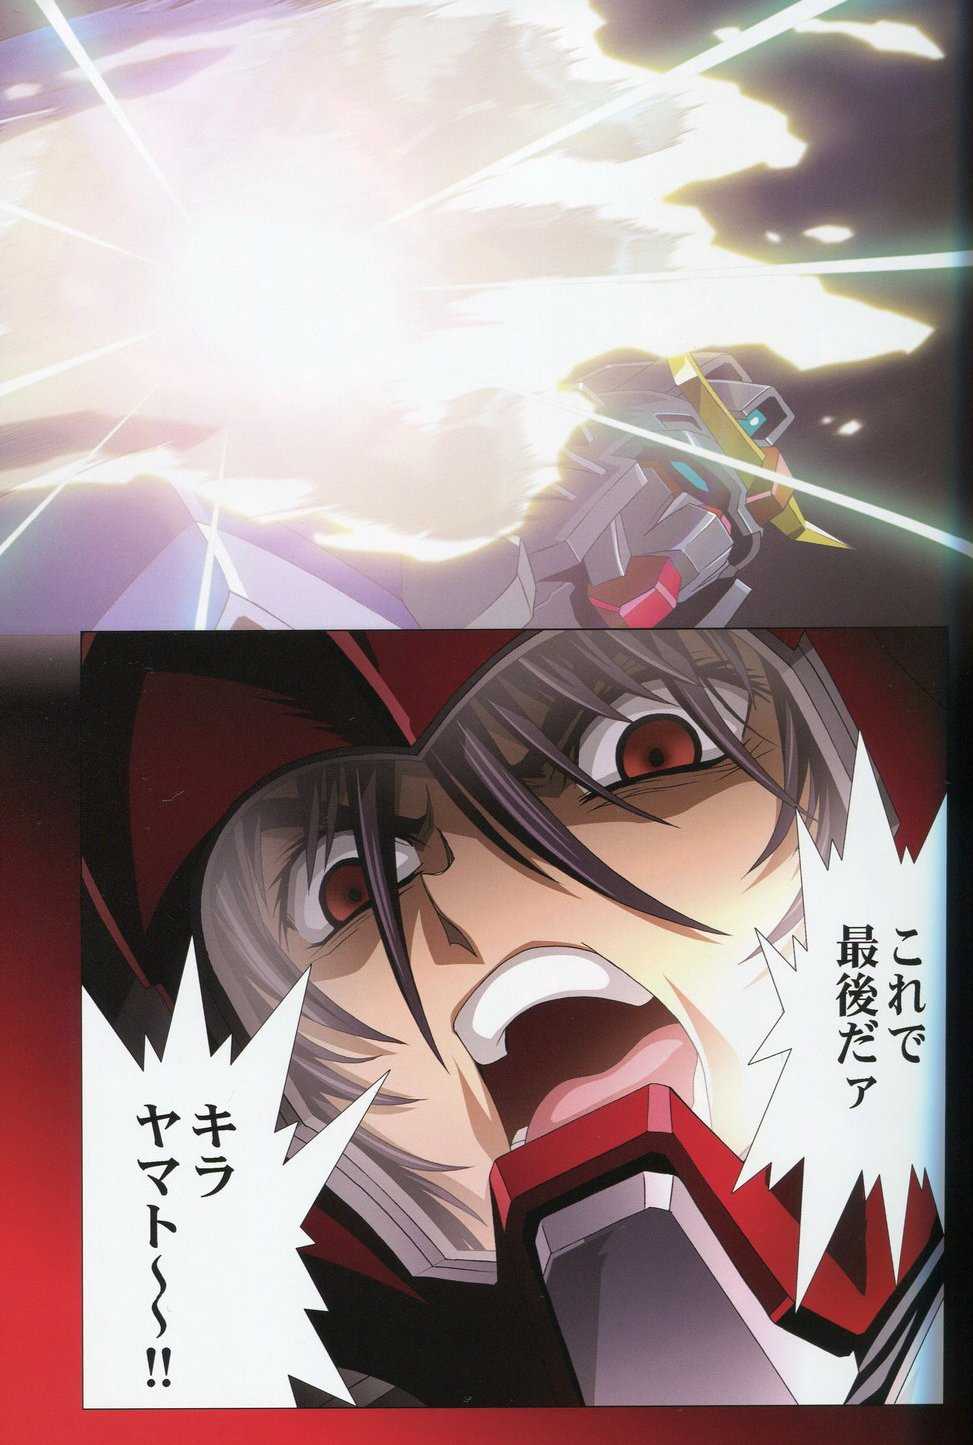 [HenReiKai] - Gundam SEED - Another Century D.E. 6 Destiny Epilogue/Epiroge 